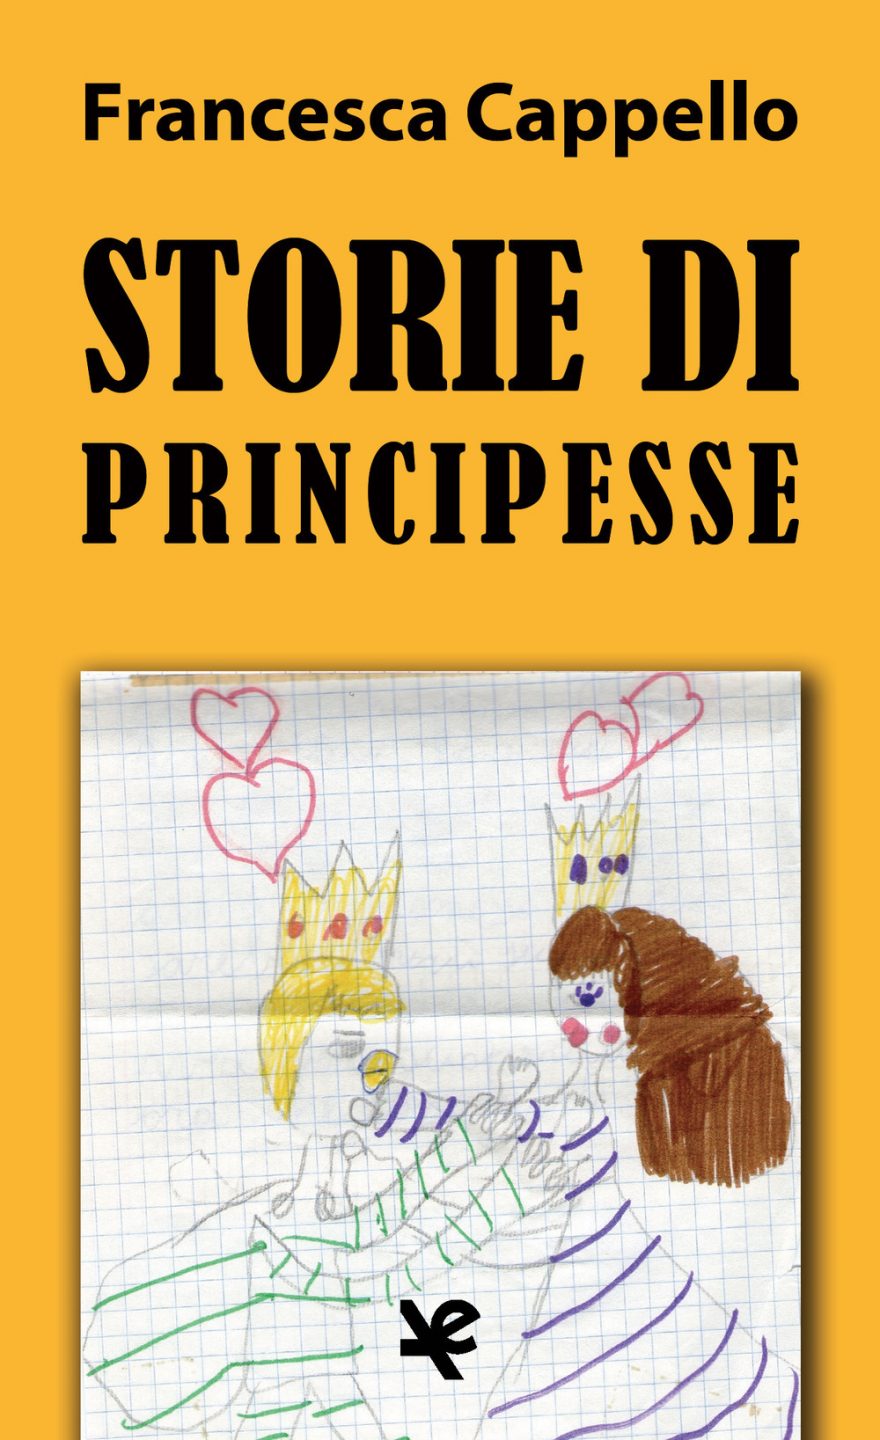 "Storie di Principesse", di Francesca Cappello